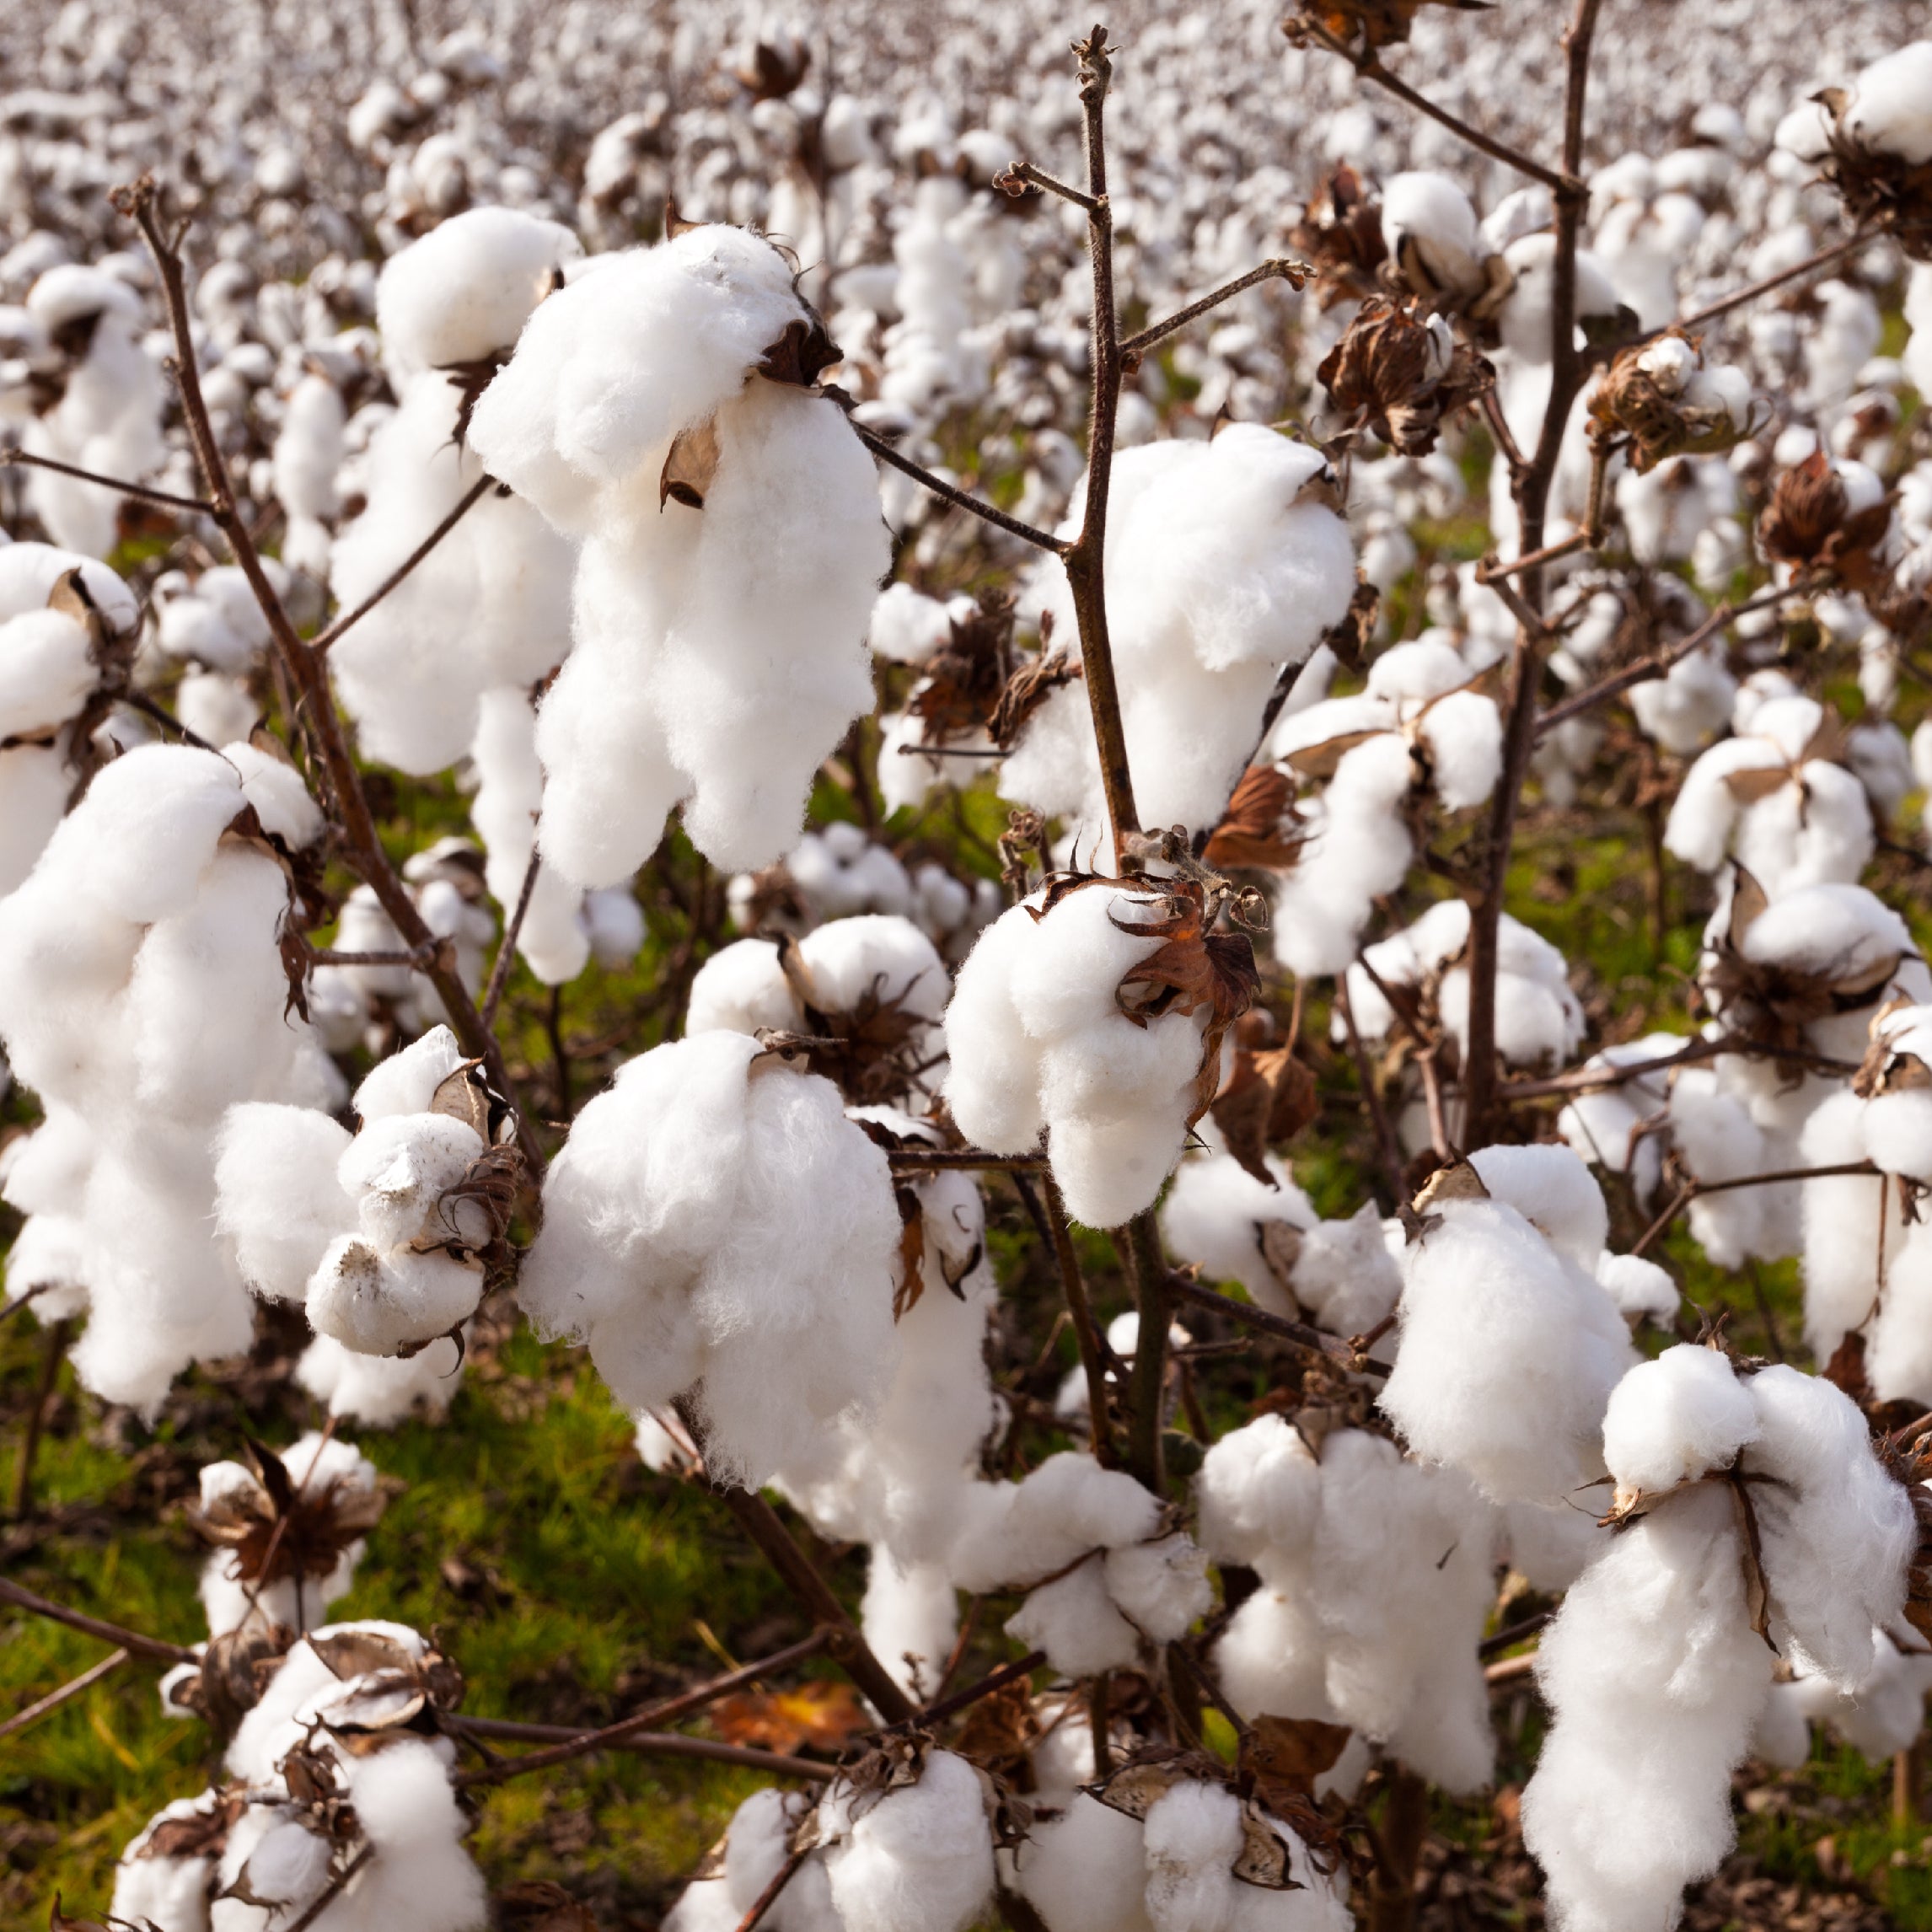 Close up image of cotton plants